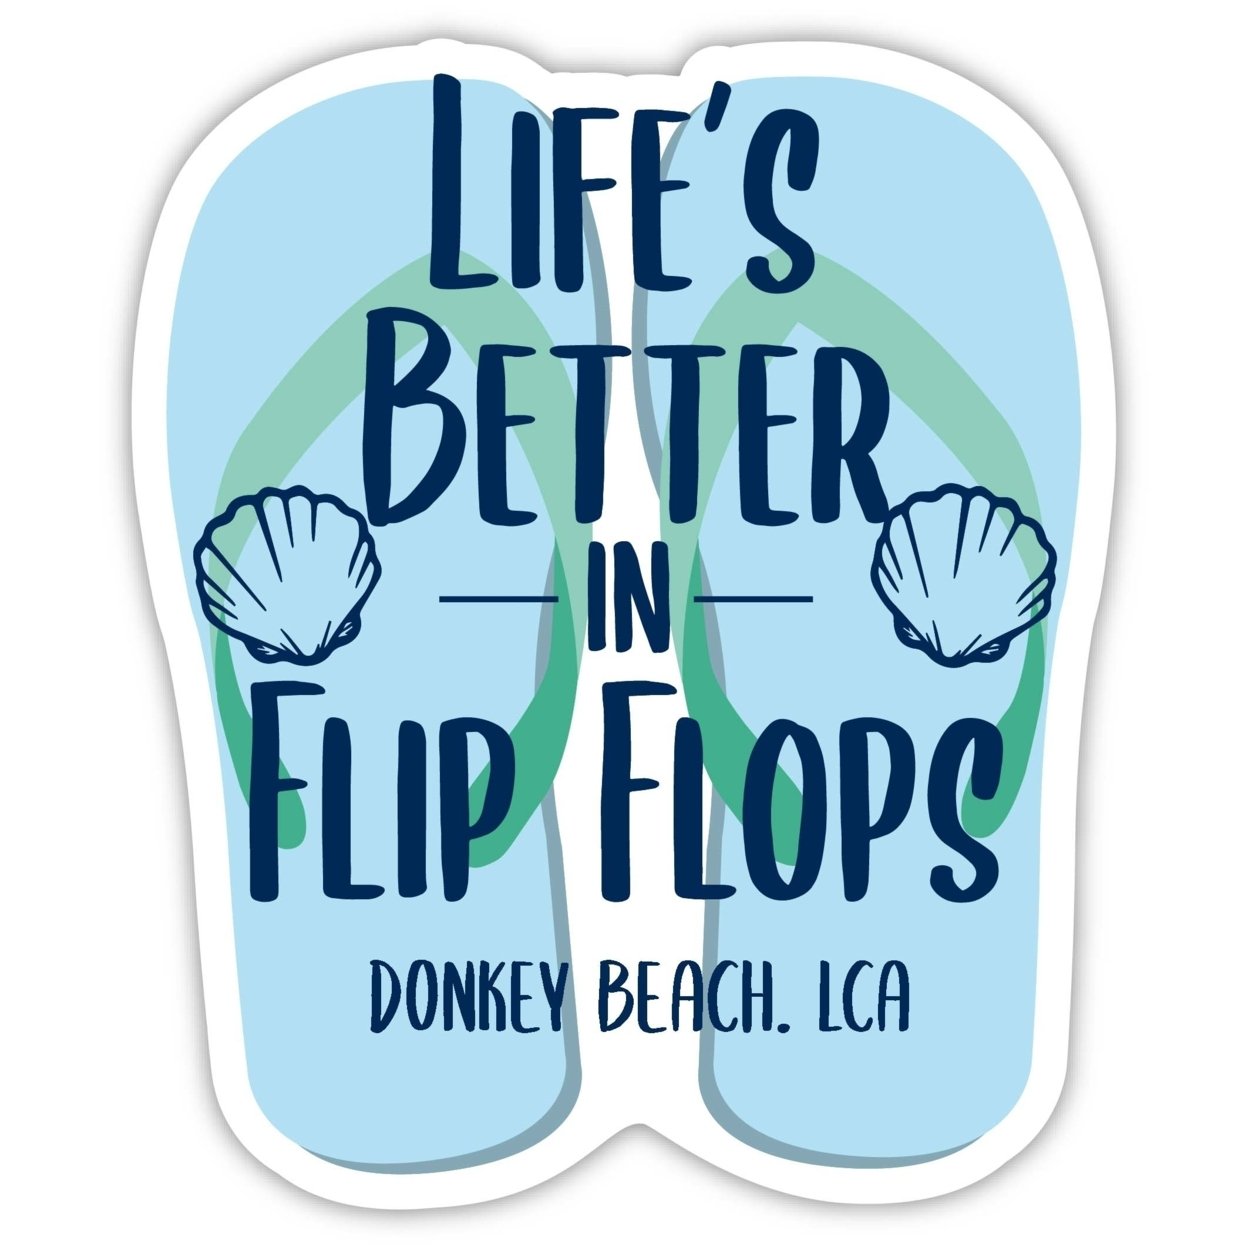 Donkey Beach St. Lucia Souvenir 4 Inch Vinyl Decal Sticker Flip Flop Design